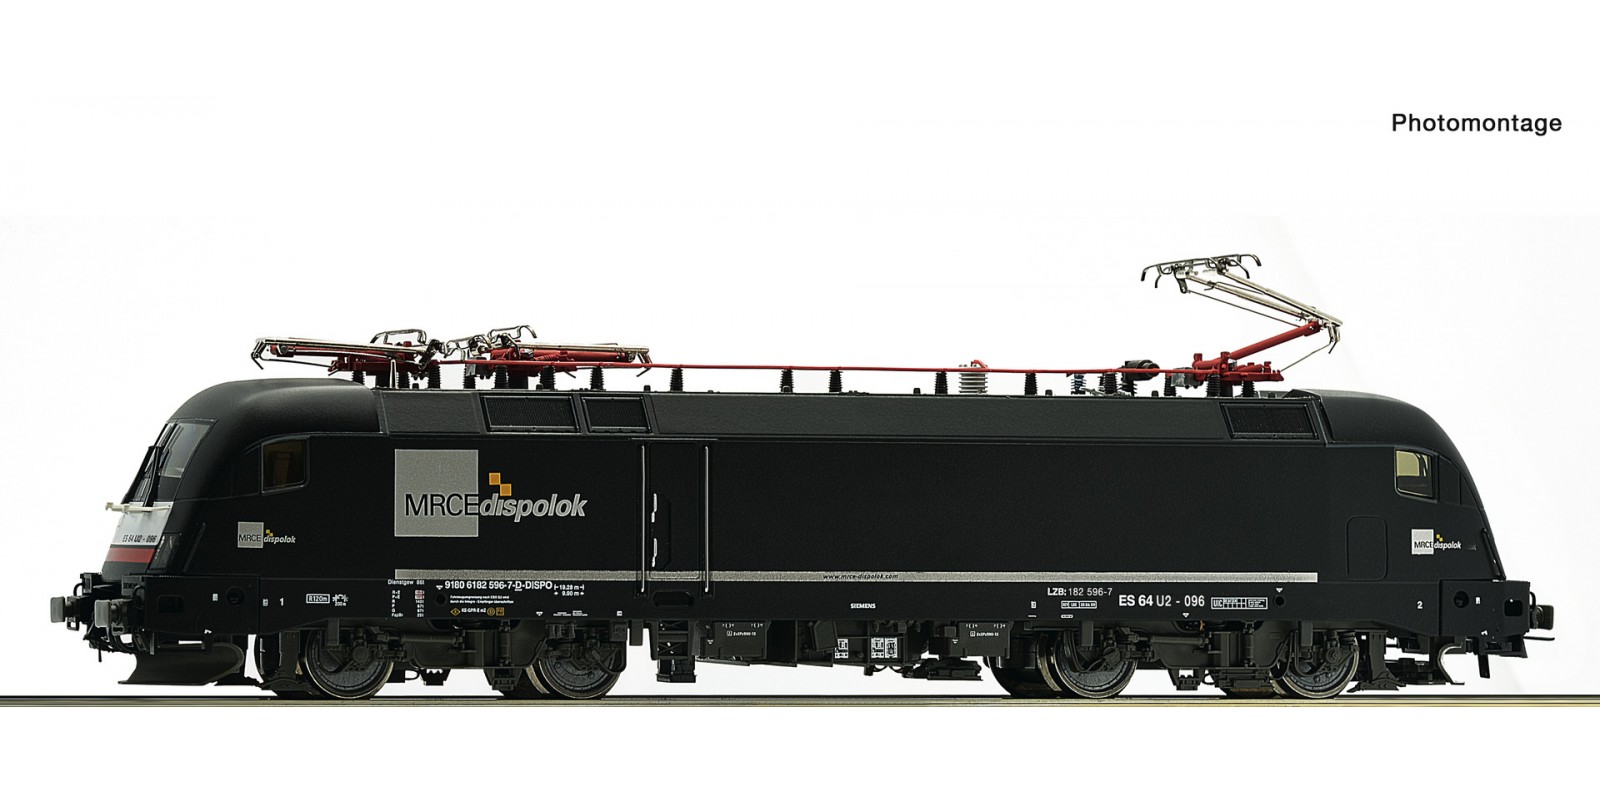 RO78519 Electric locomotive 182 596-7, MRCE